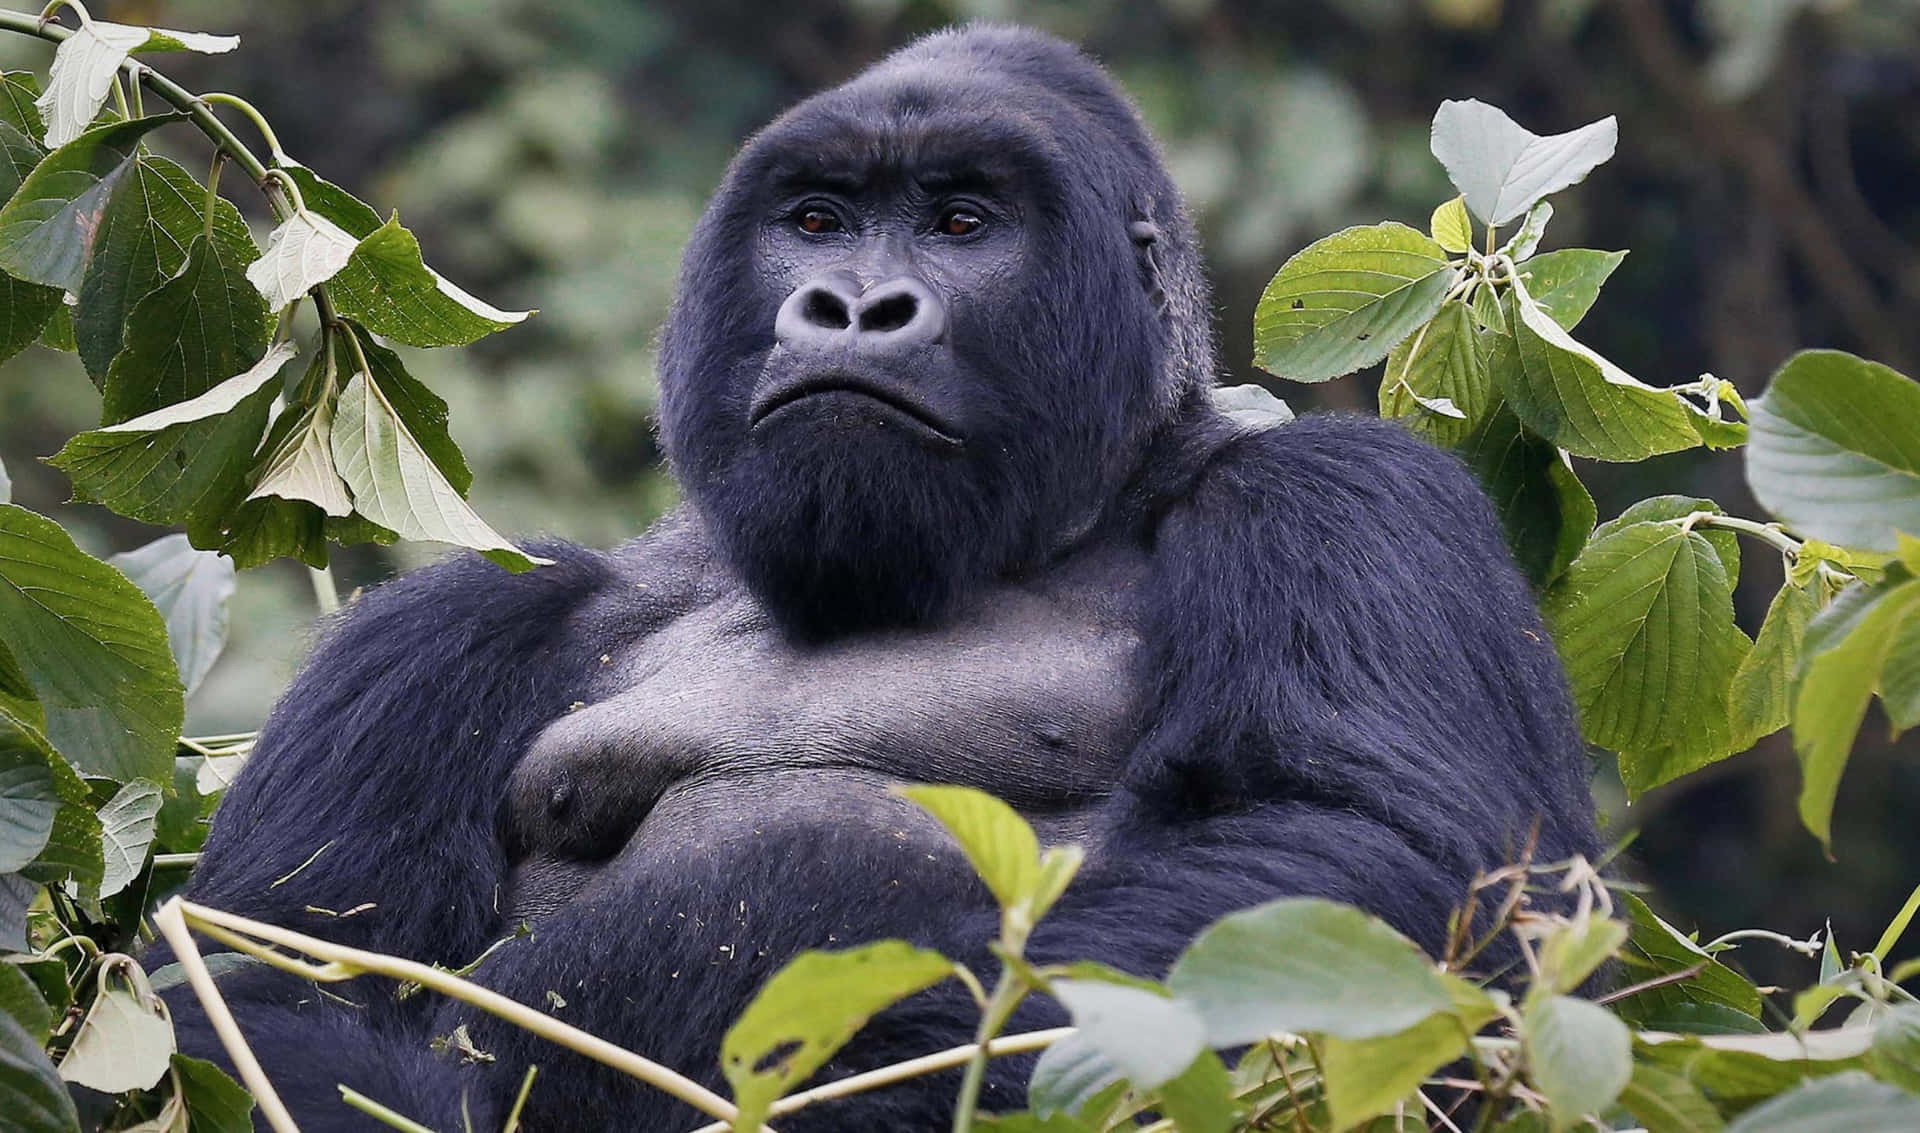 A majestic male Gorilla in its natural habitat